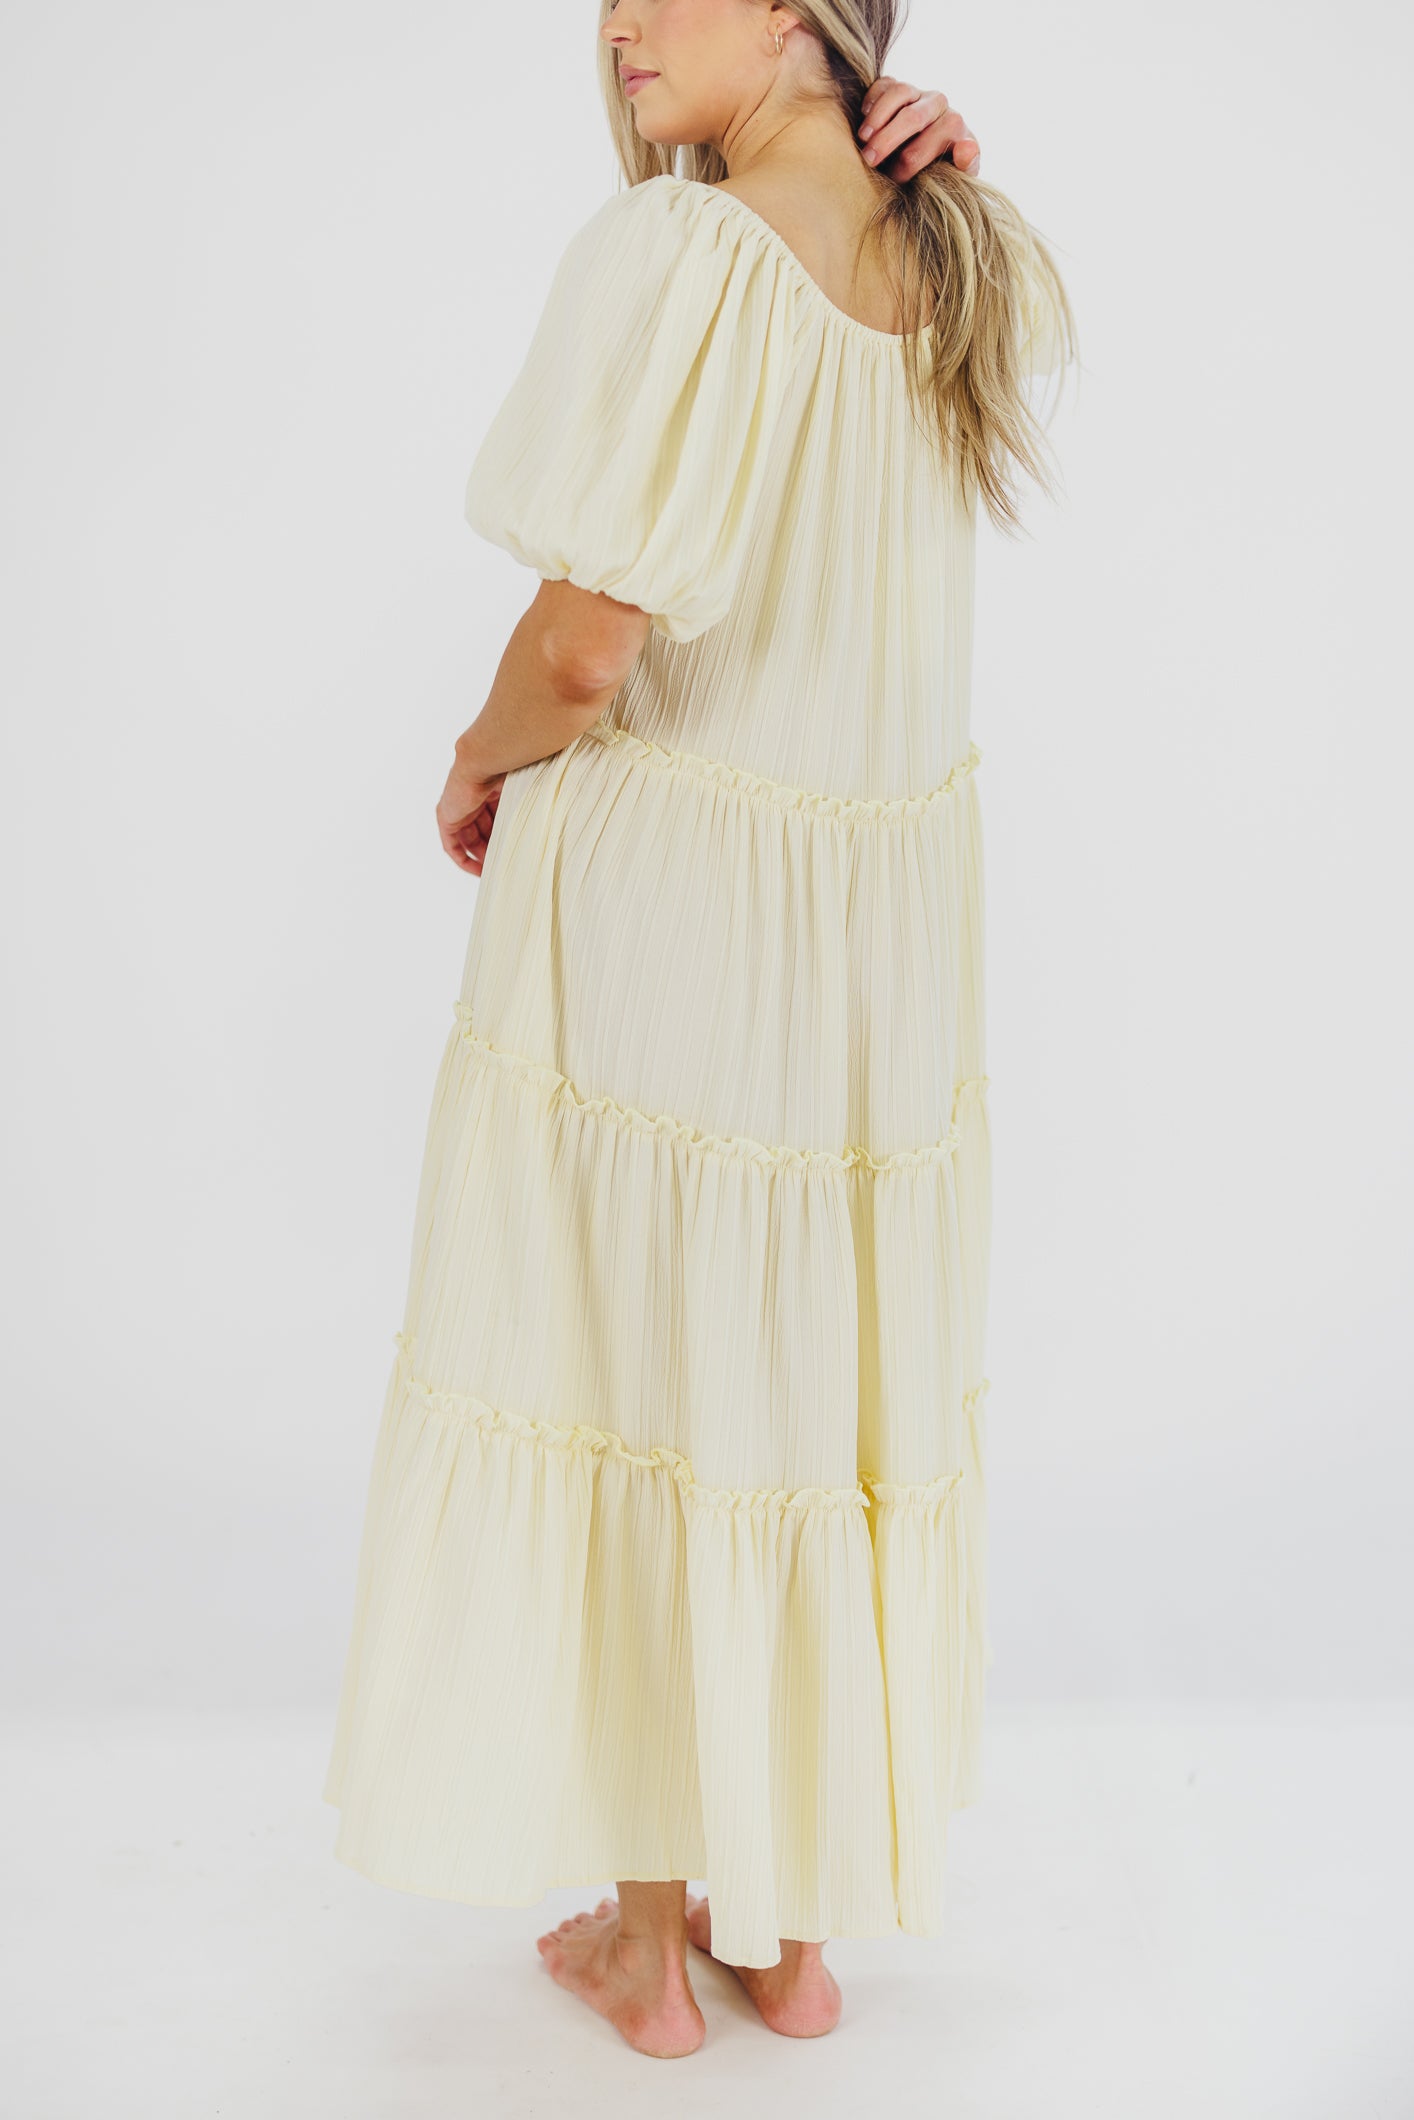 Eva Puffed Sleeve Maxi Dress in Pale Yellow - Bump Friendly & Inclusive Sizing (S-3XL)